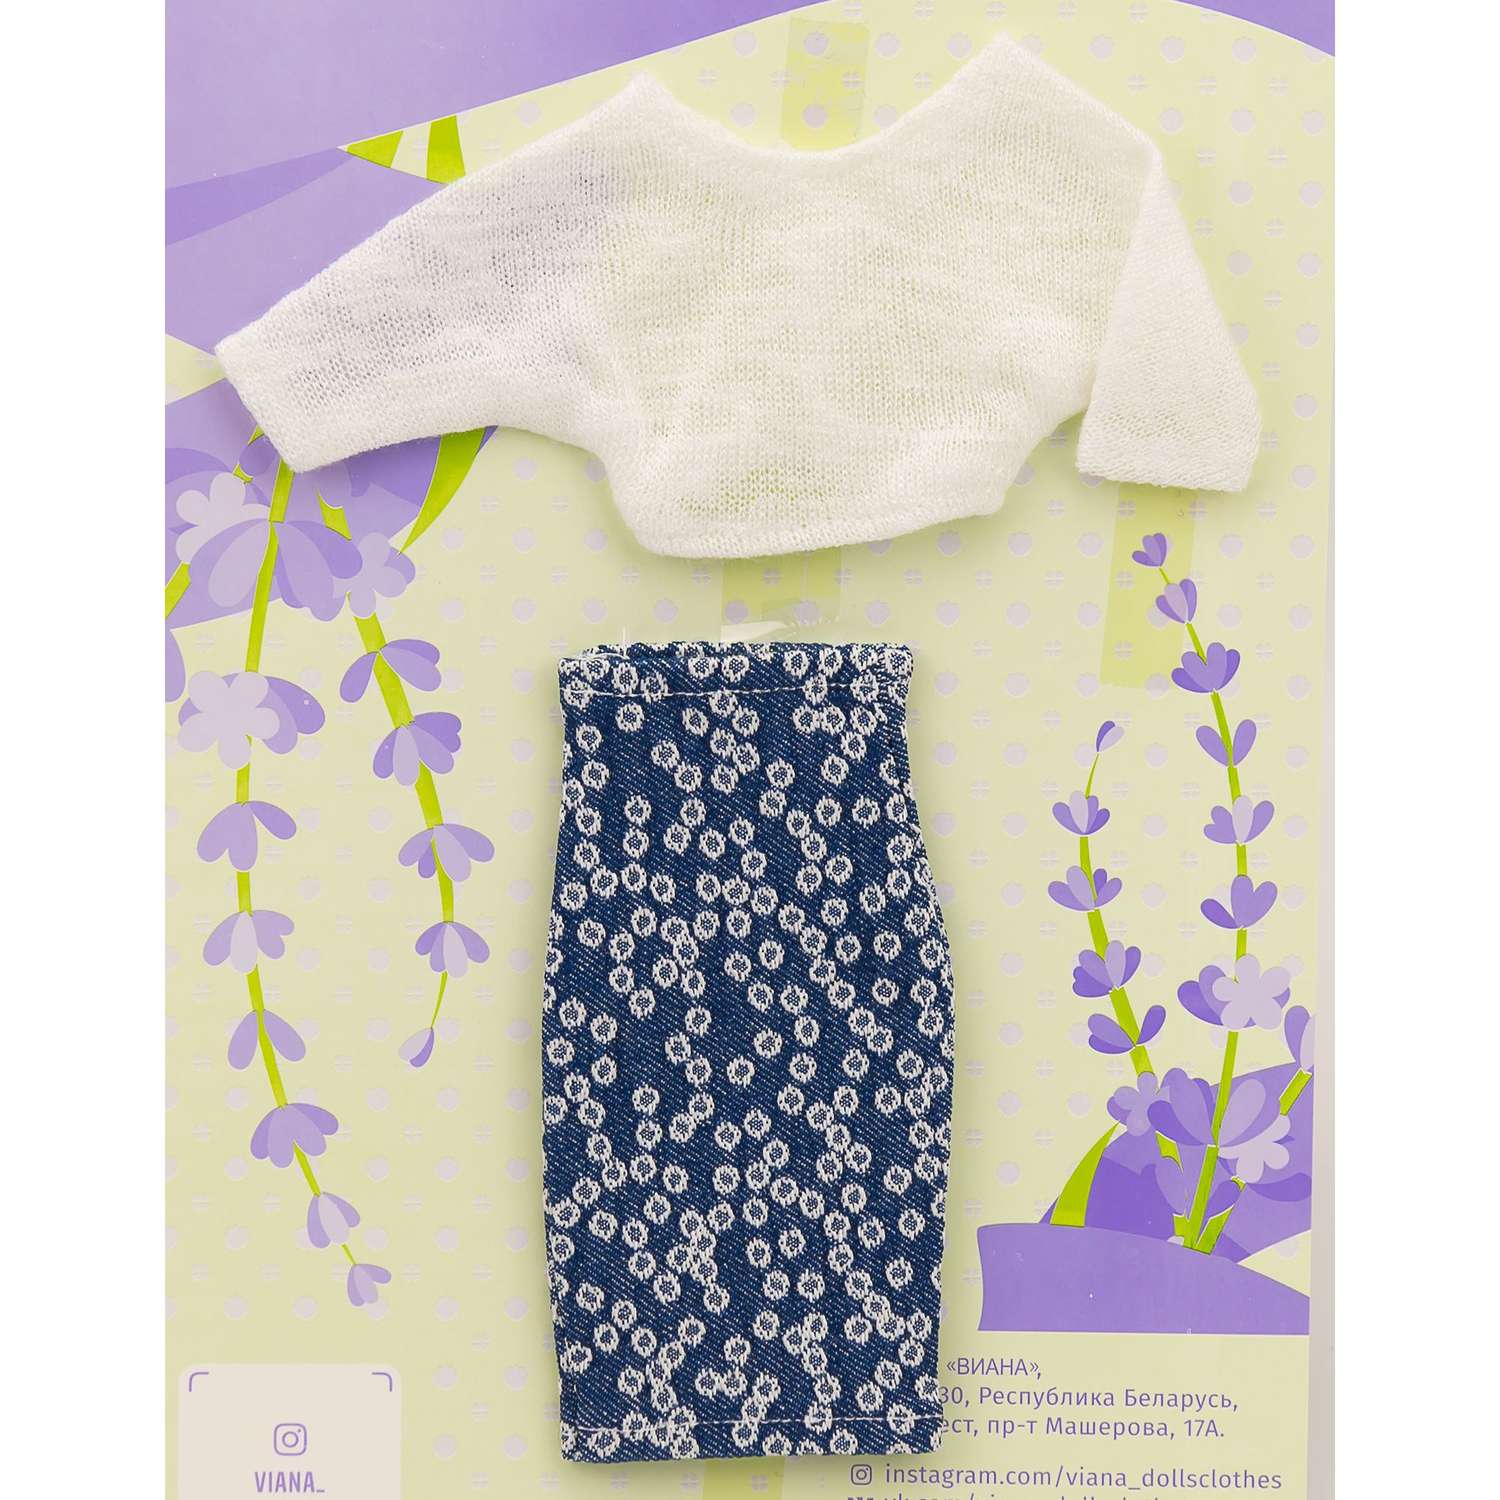 Одежда для кукол типа Барби VIANA свитер и юбка 2 предмета молочно-синий 11.113.11 - фото 1